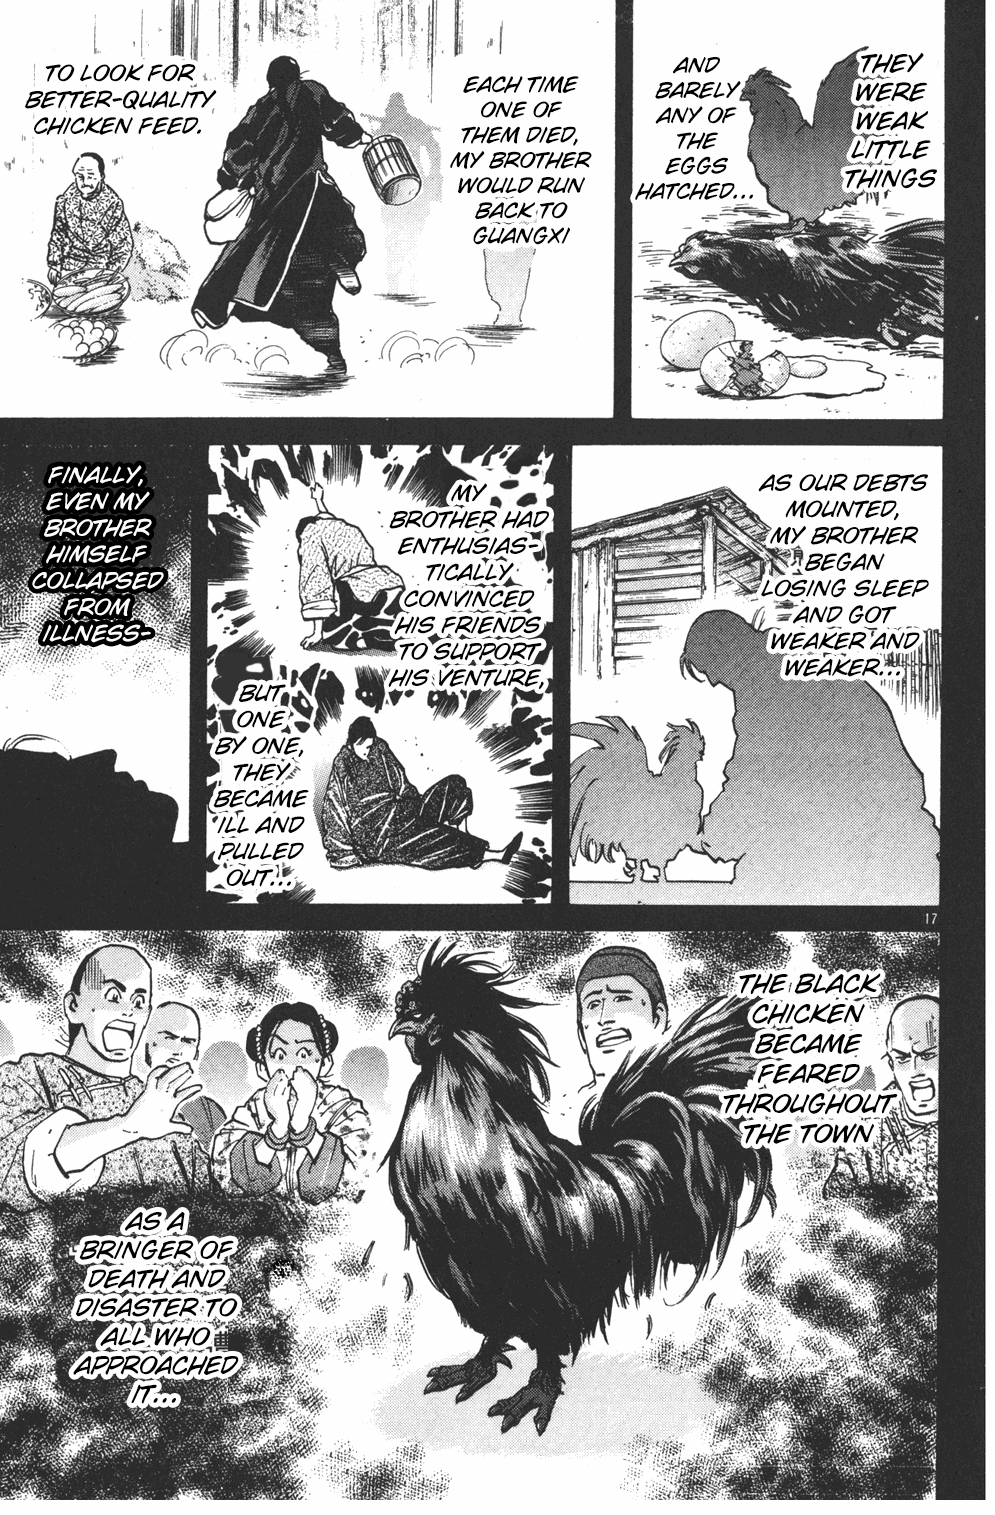 Shin Chuuka Ichiban! Vol. 1 Ch. 1 The One Carrying On The Dream